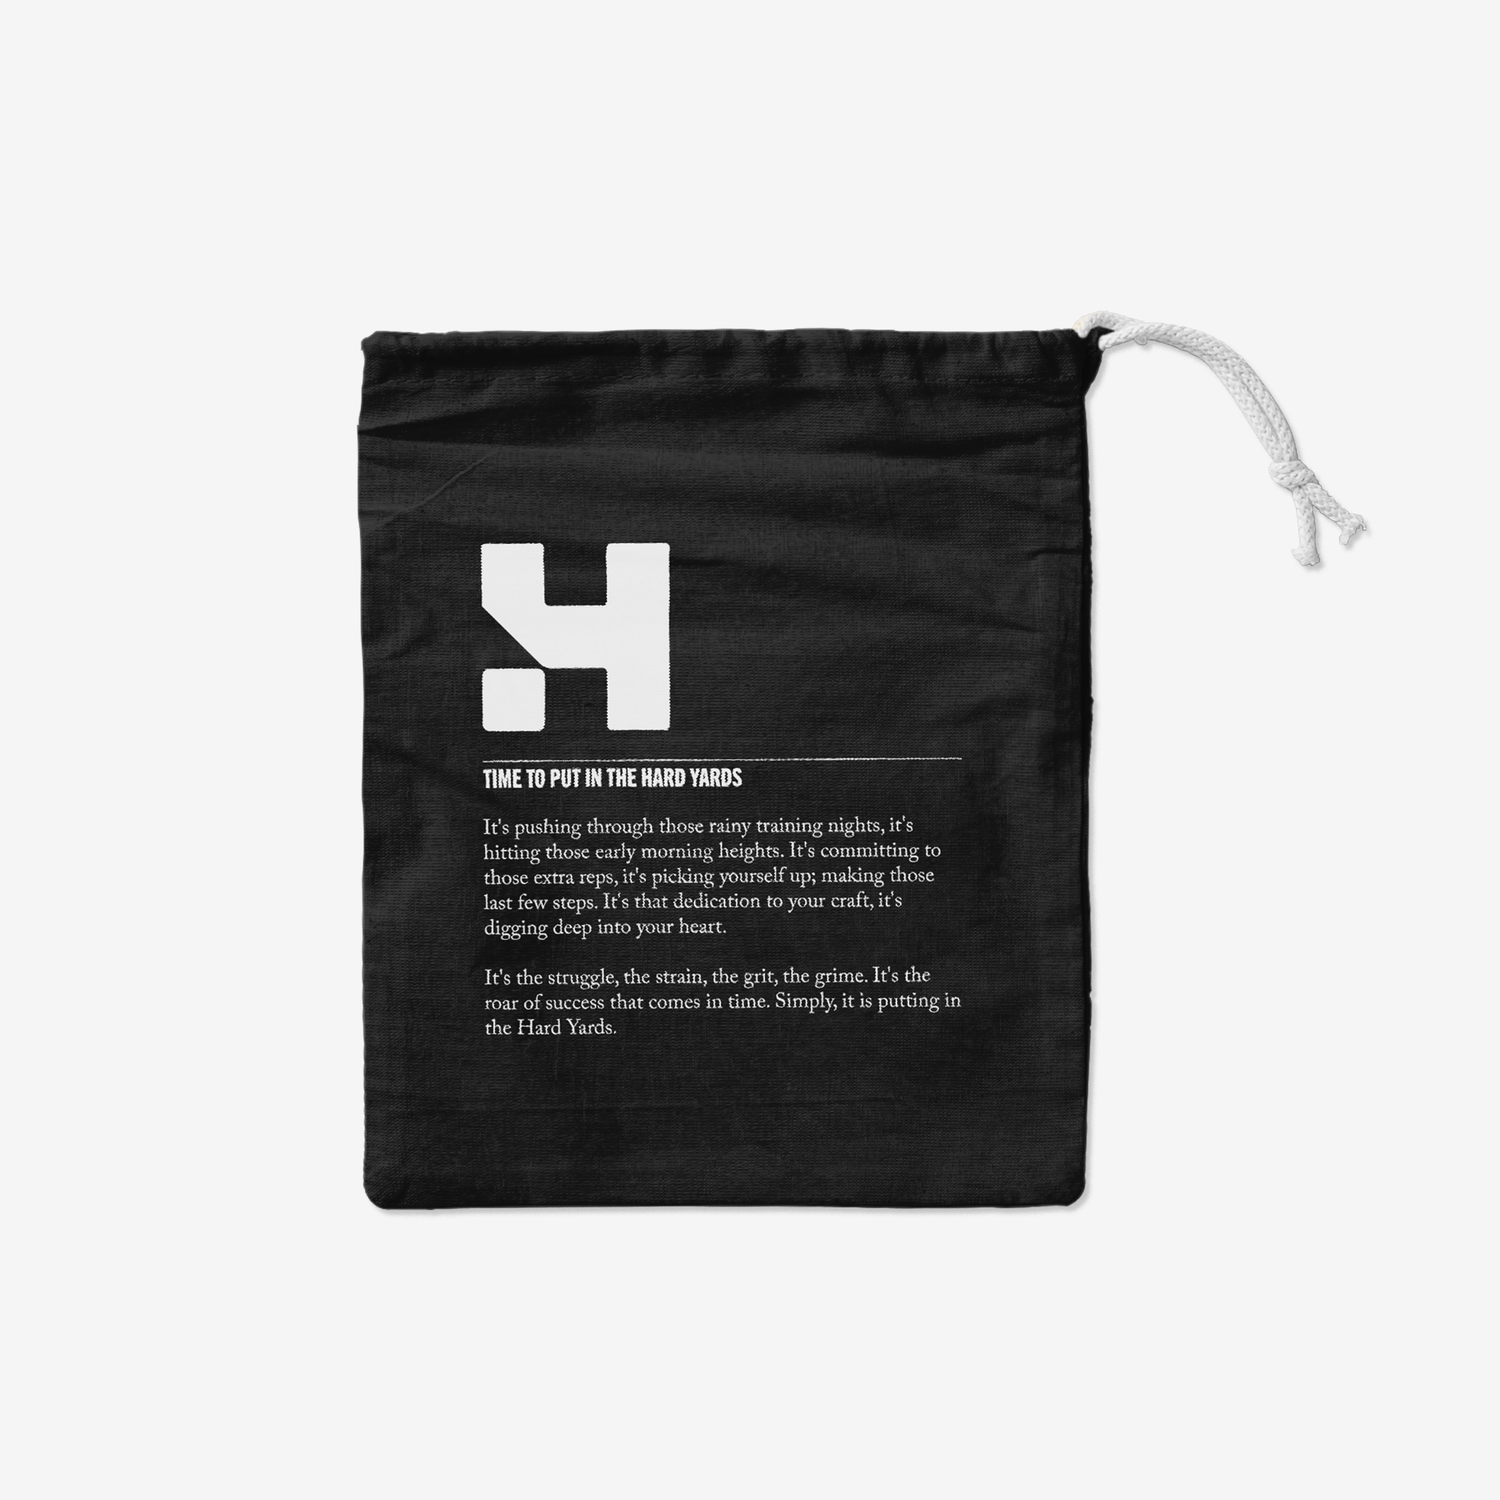 Hard Yards Sweatband & Hidden Pocket (10mm) - The Cricket Store